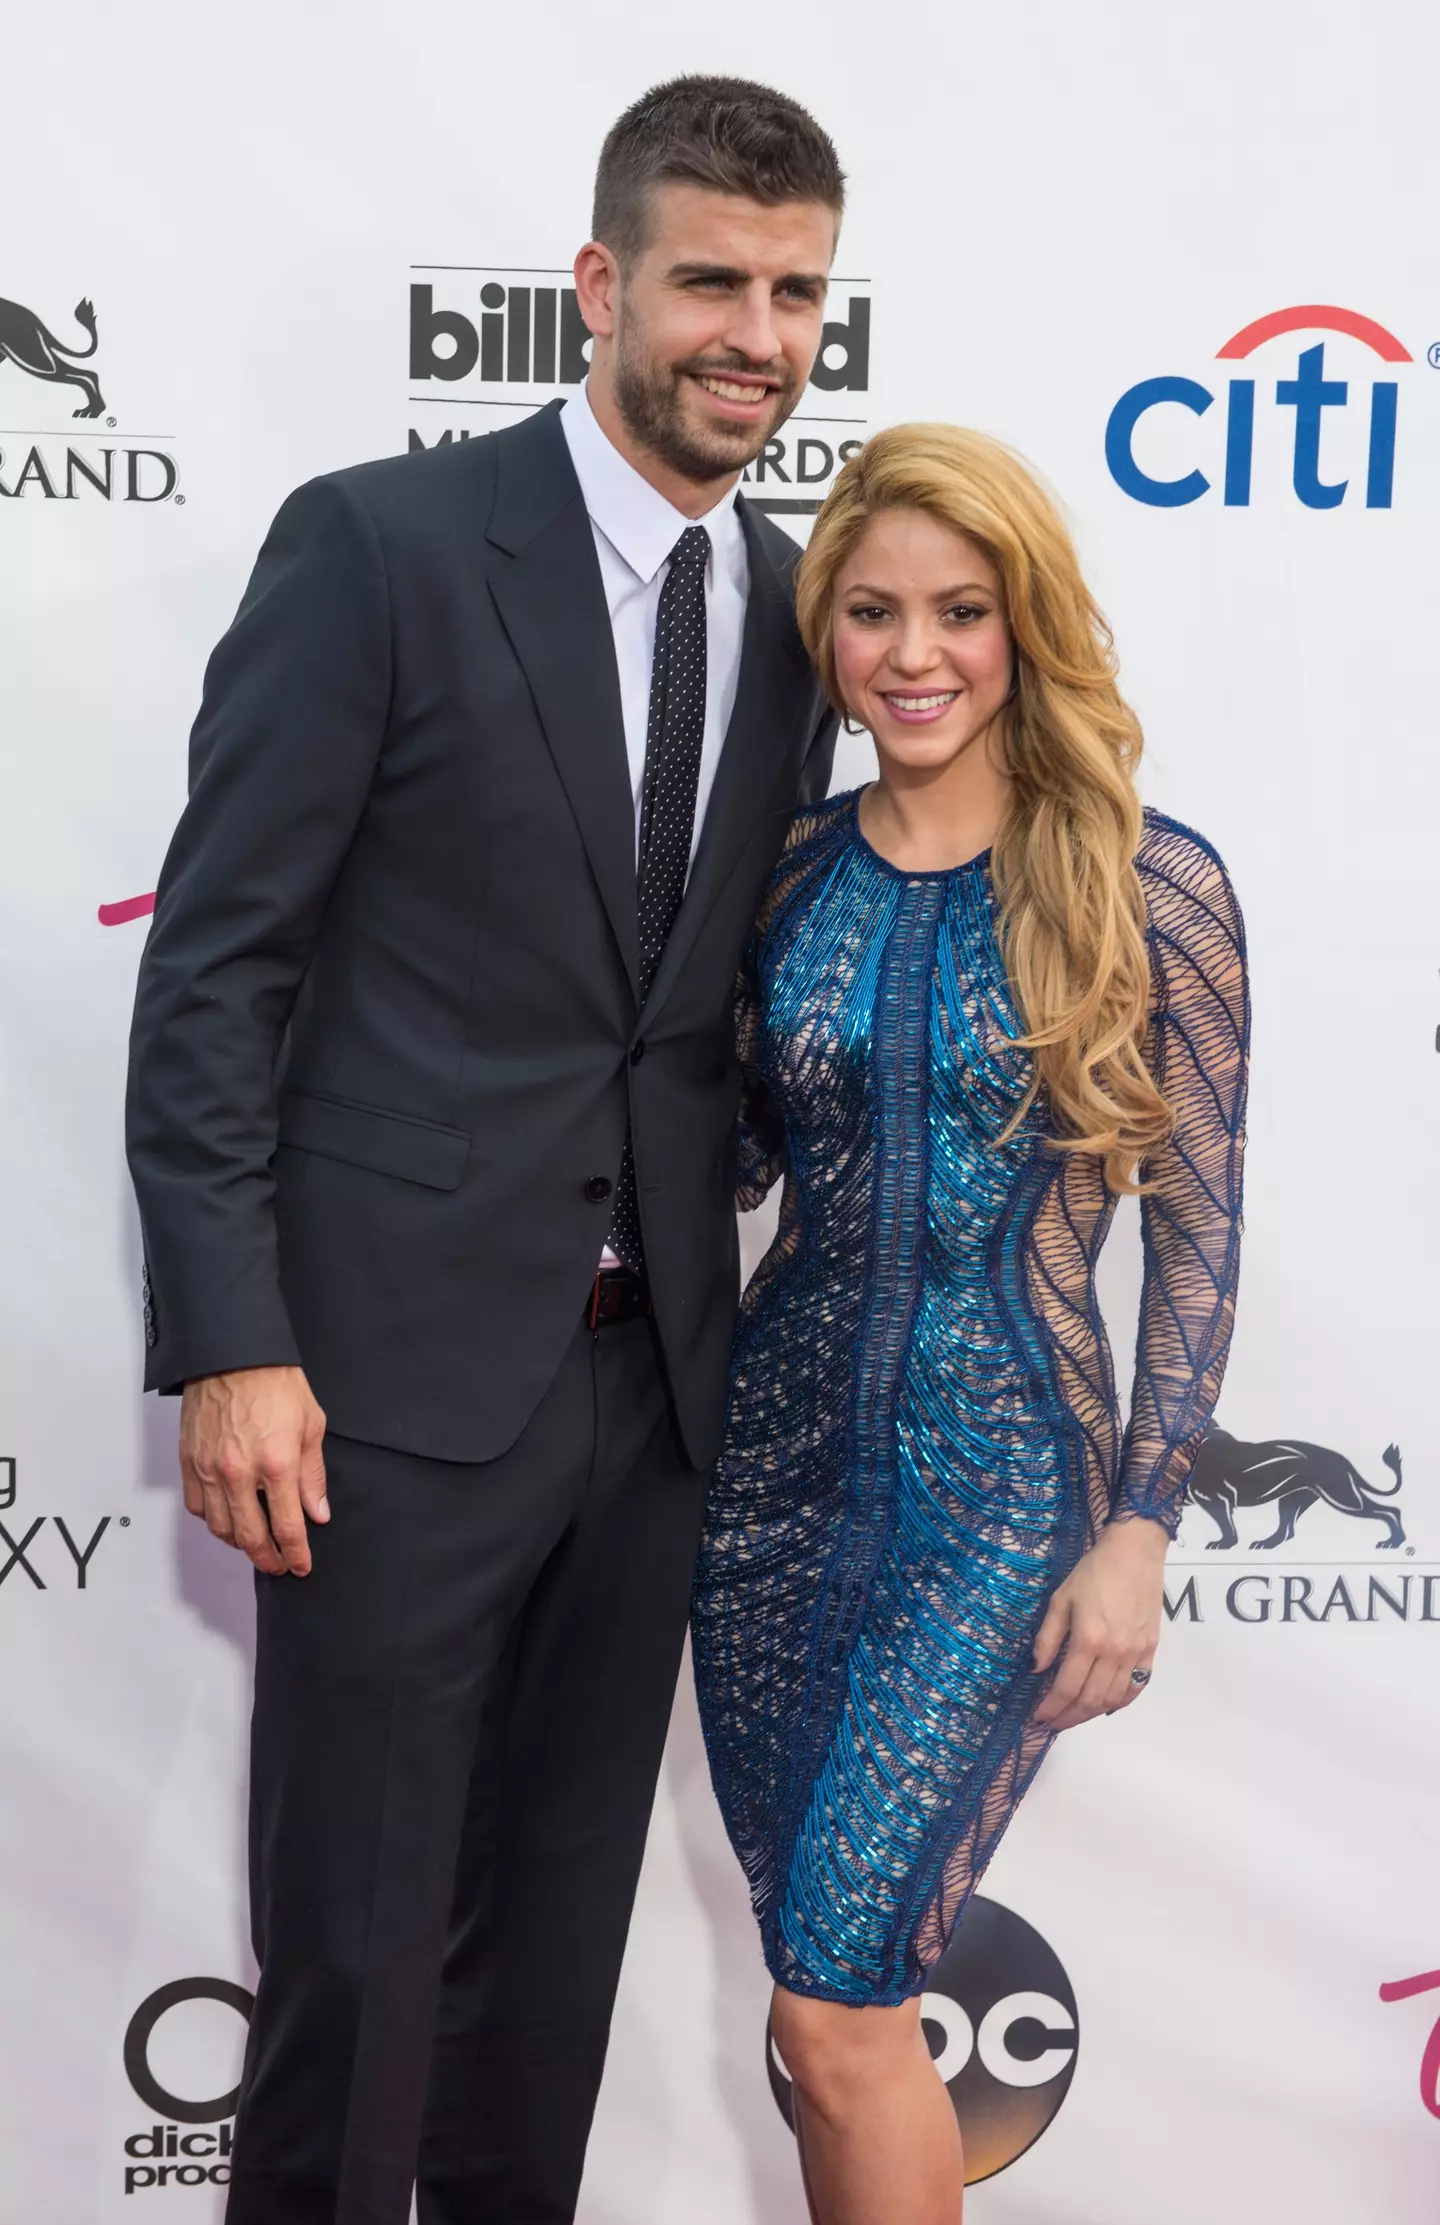 Gerard Piqué and Shakira announced they had split last year.